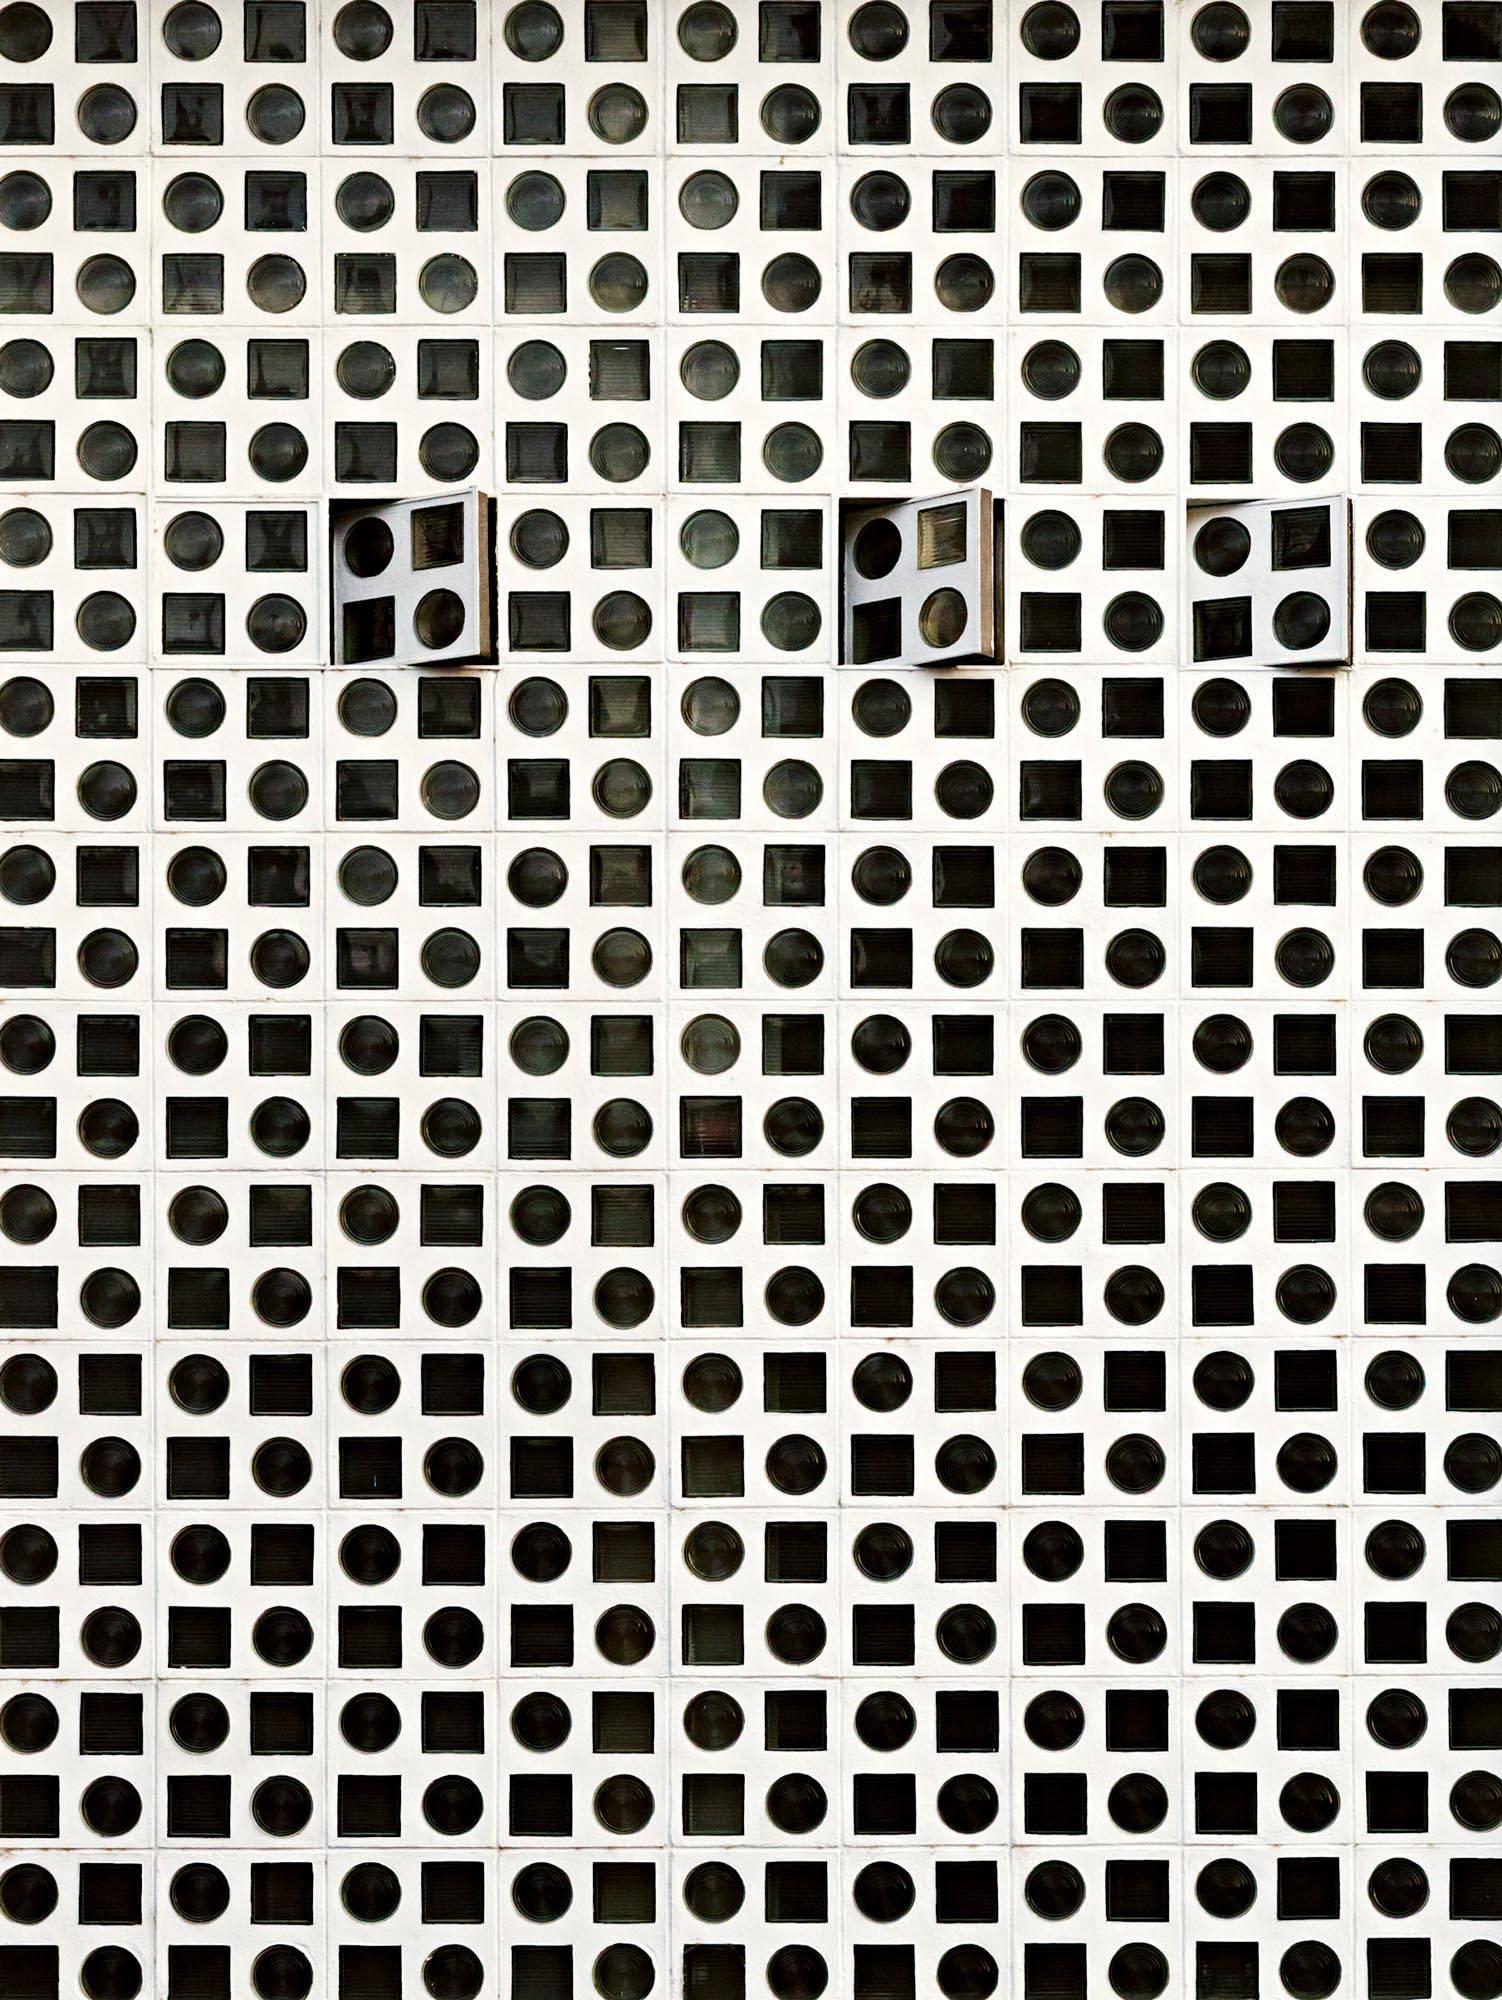 Andrea Grützner Black and White Photograph - Untitled (circle square)